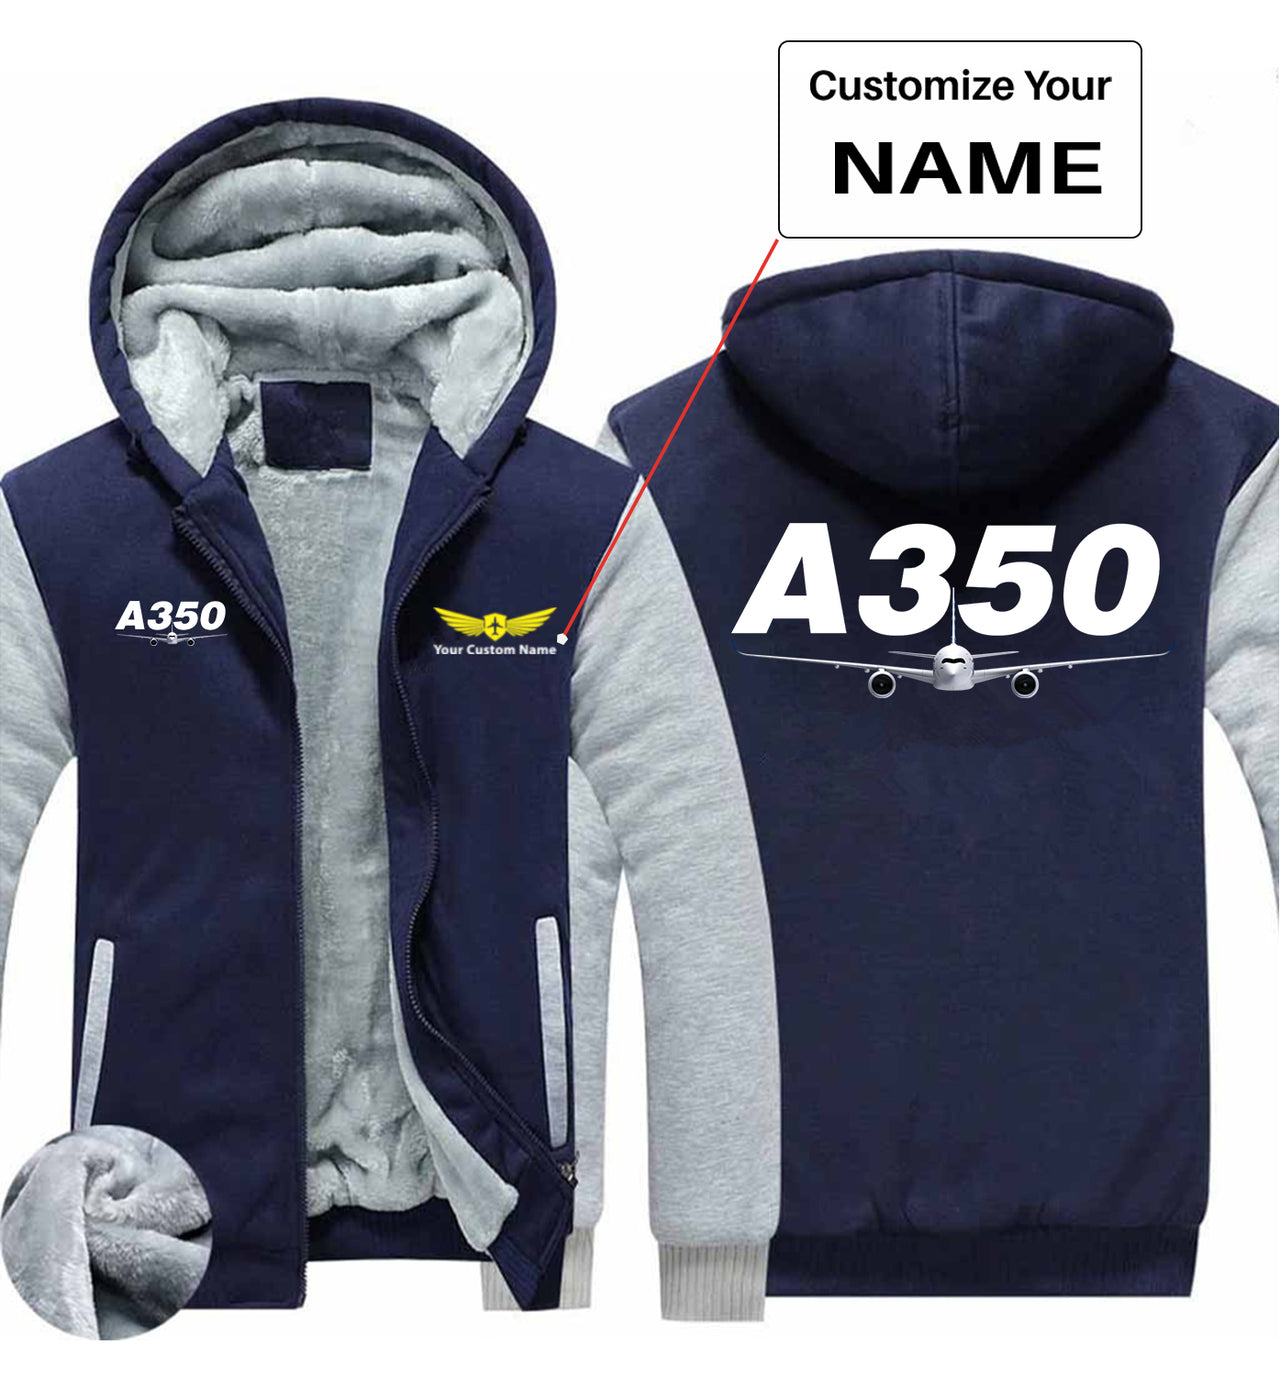 Super Airbus A350 Designed Zipped Sweatshirts